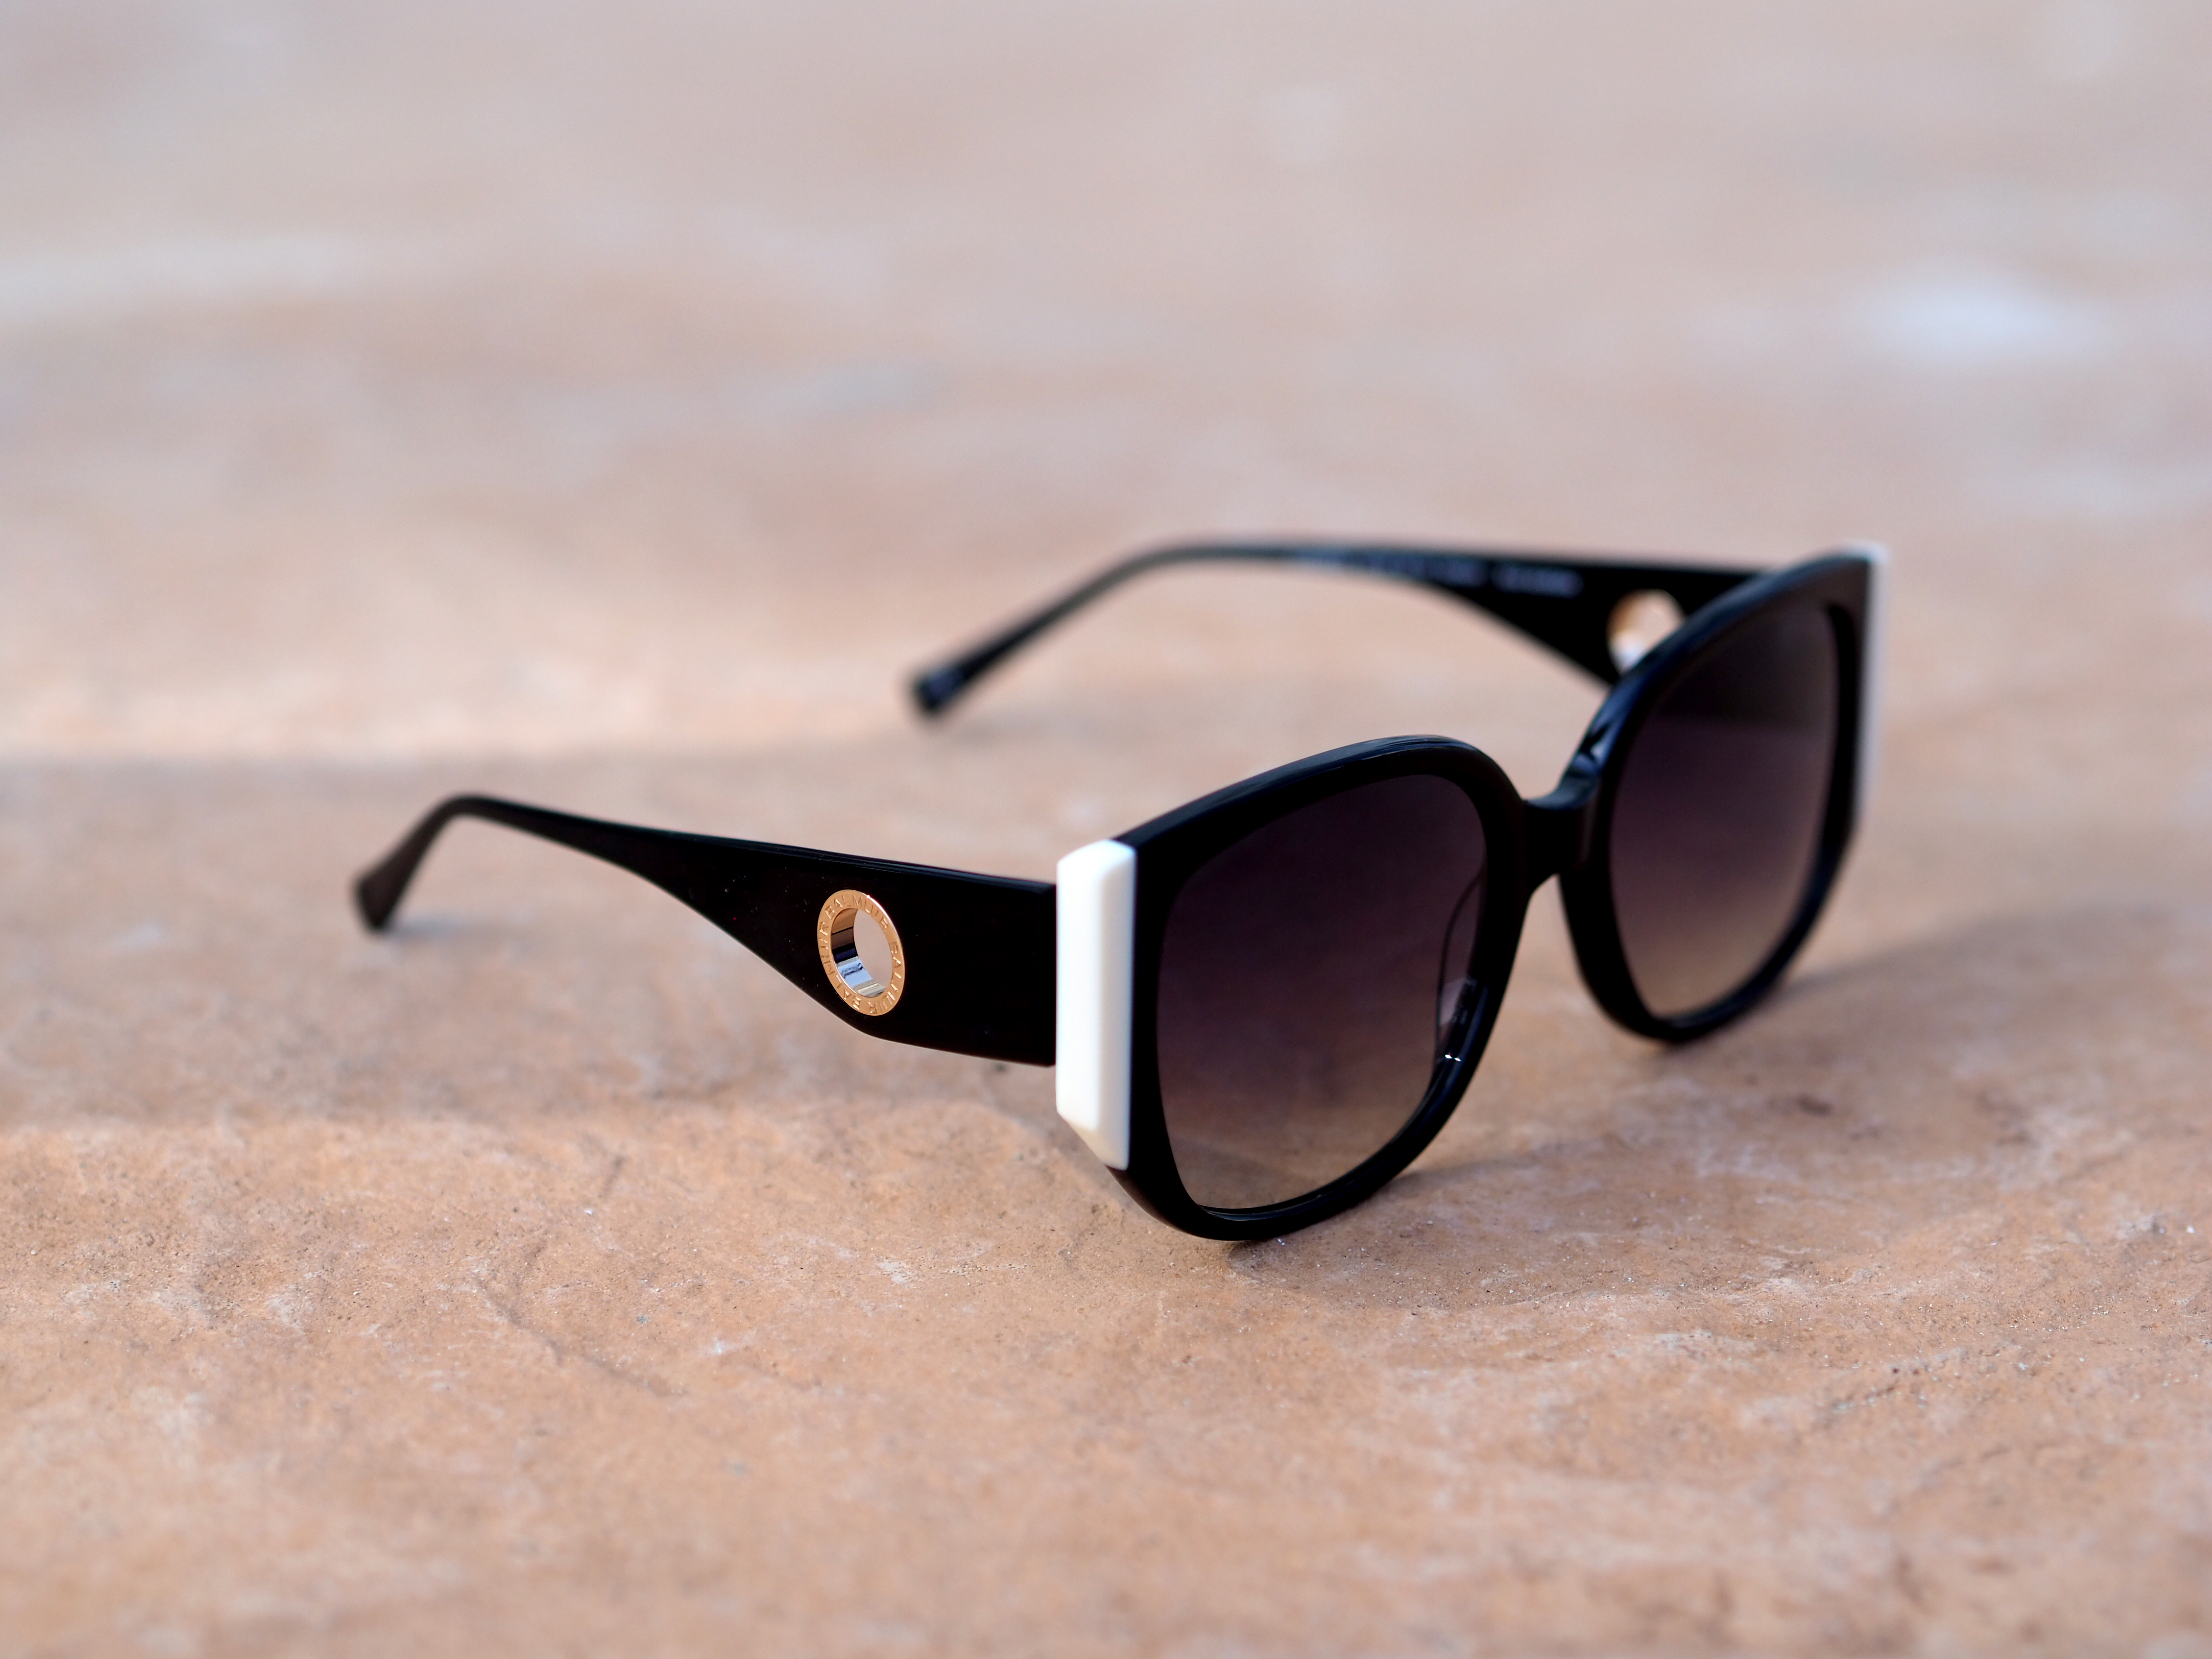 eyewear-wb-sunglasses.jpg (6.56 MB)